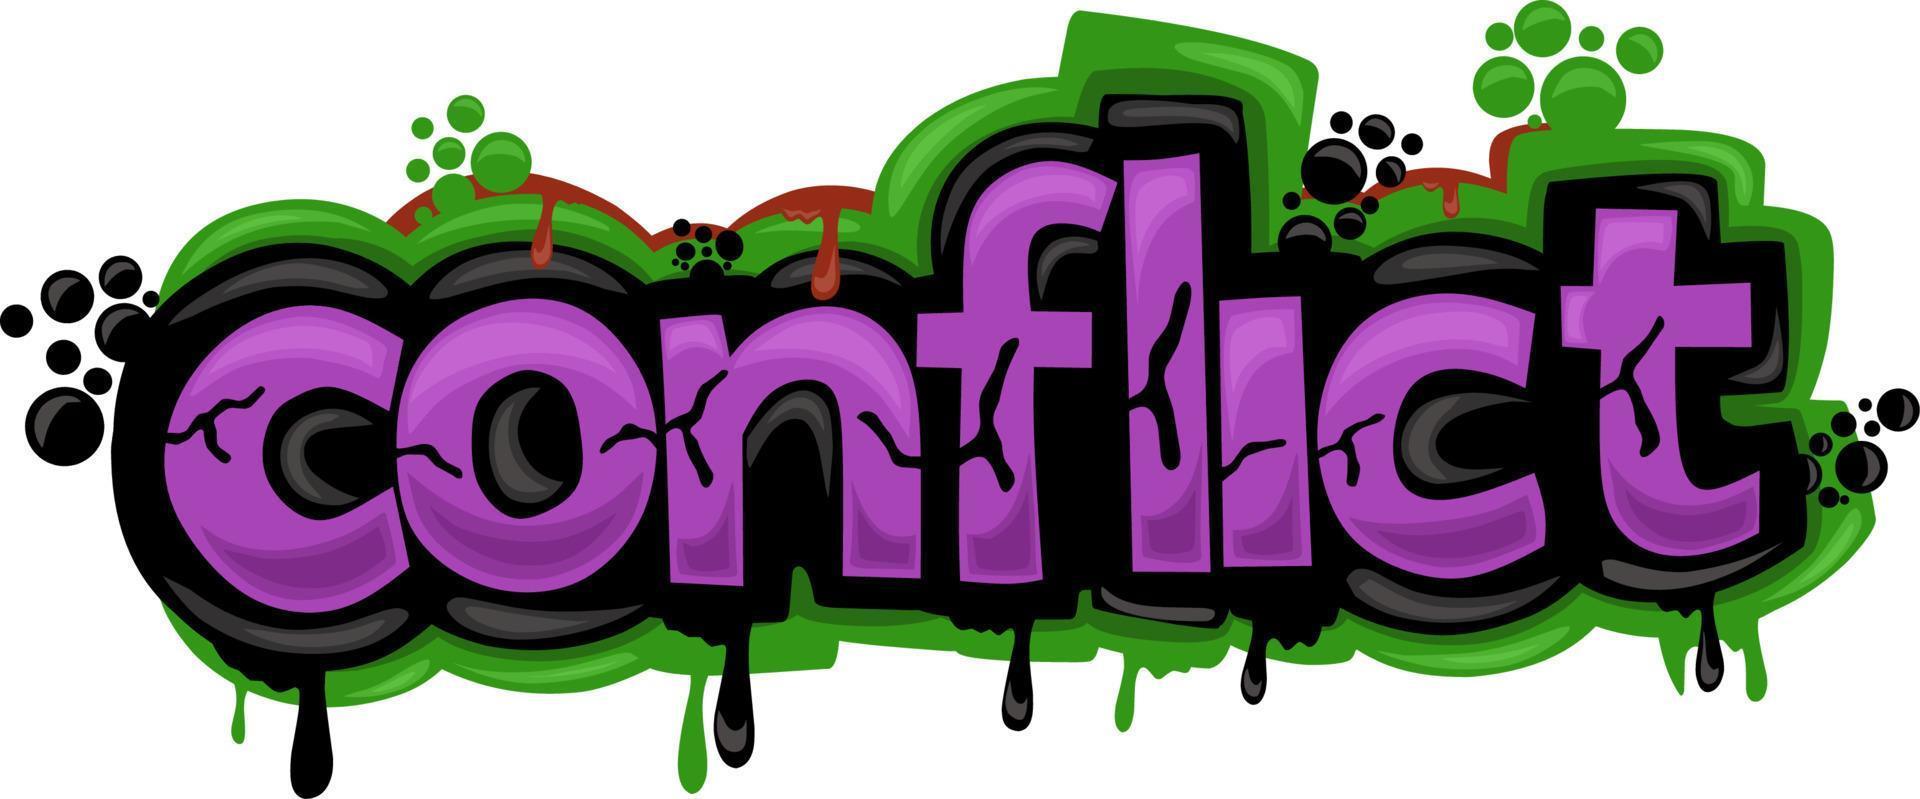 diseño de graffiti de escritura de conflicto colorido vector